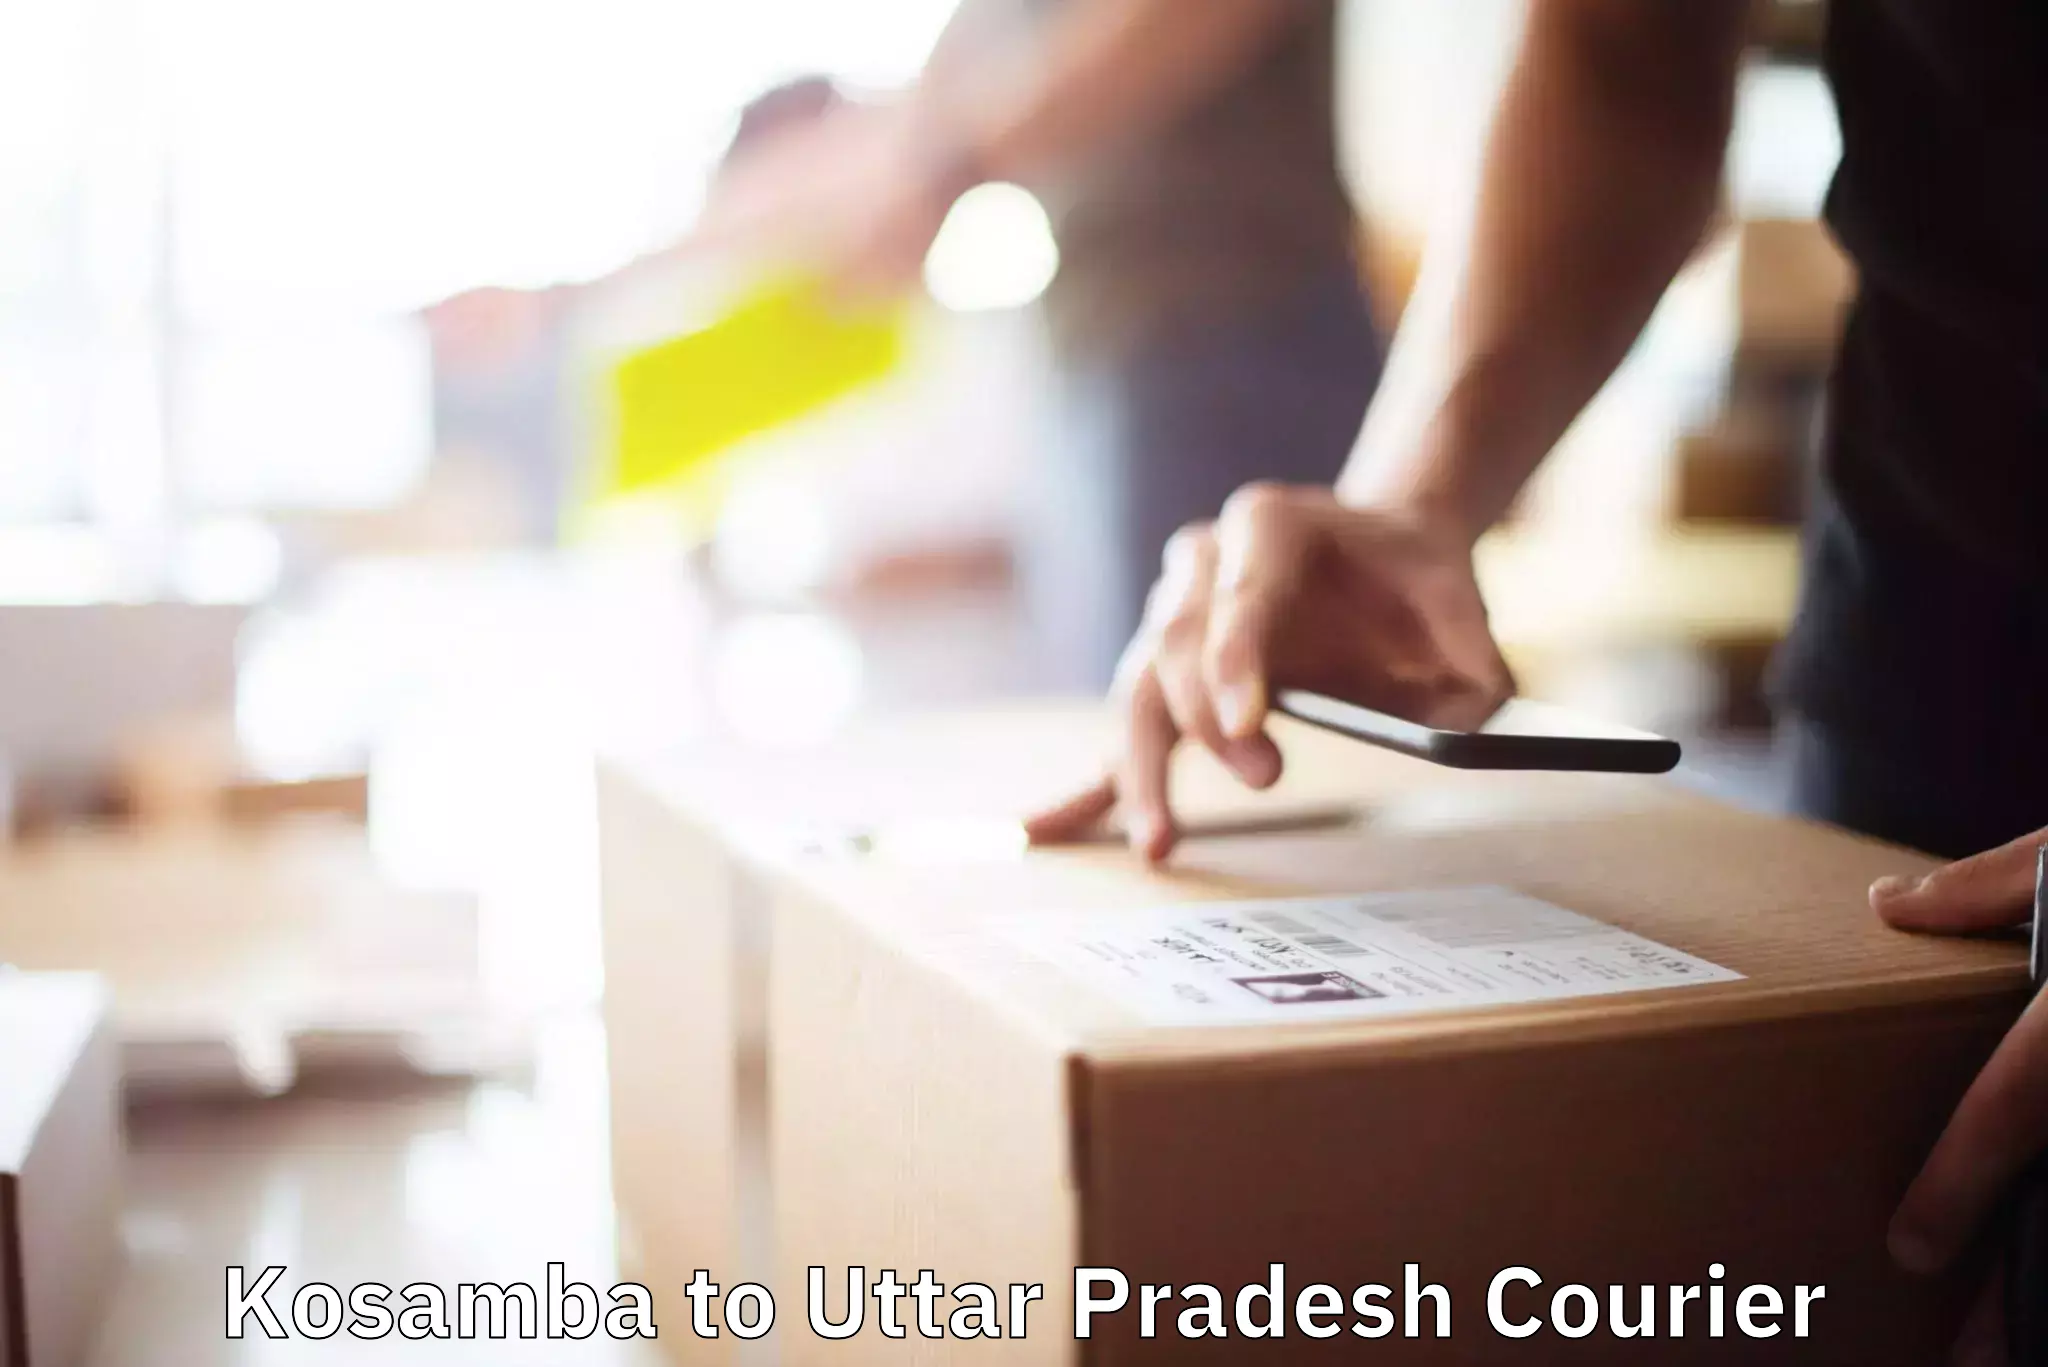 Household moving experts Kosamba to Uttar Pradesh